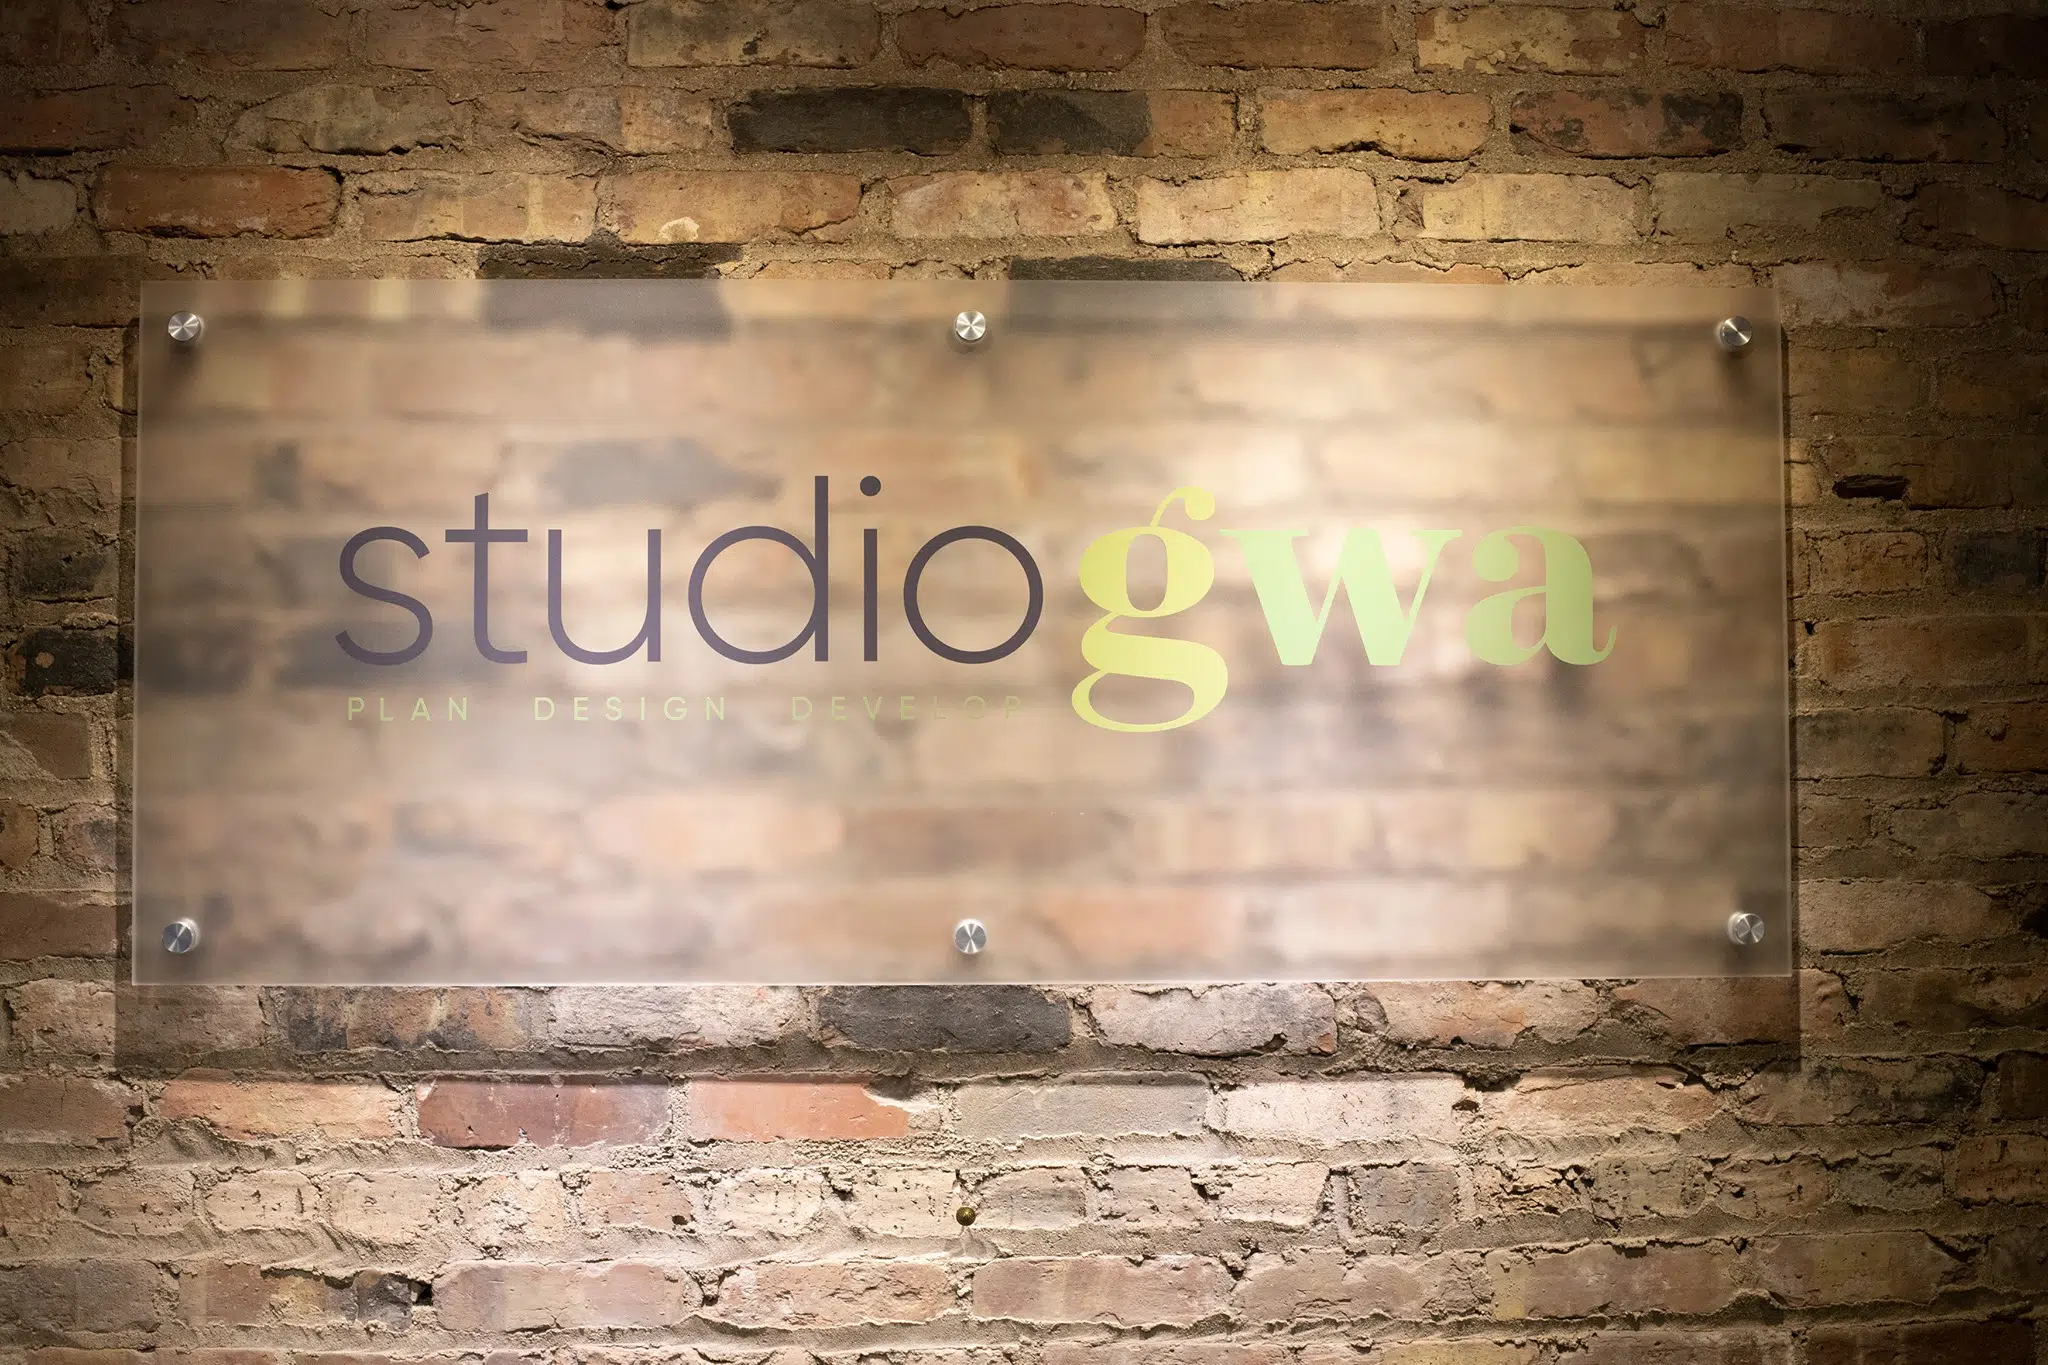 New logo at the Studio GWA office